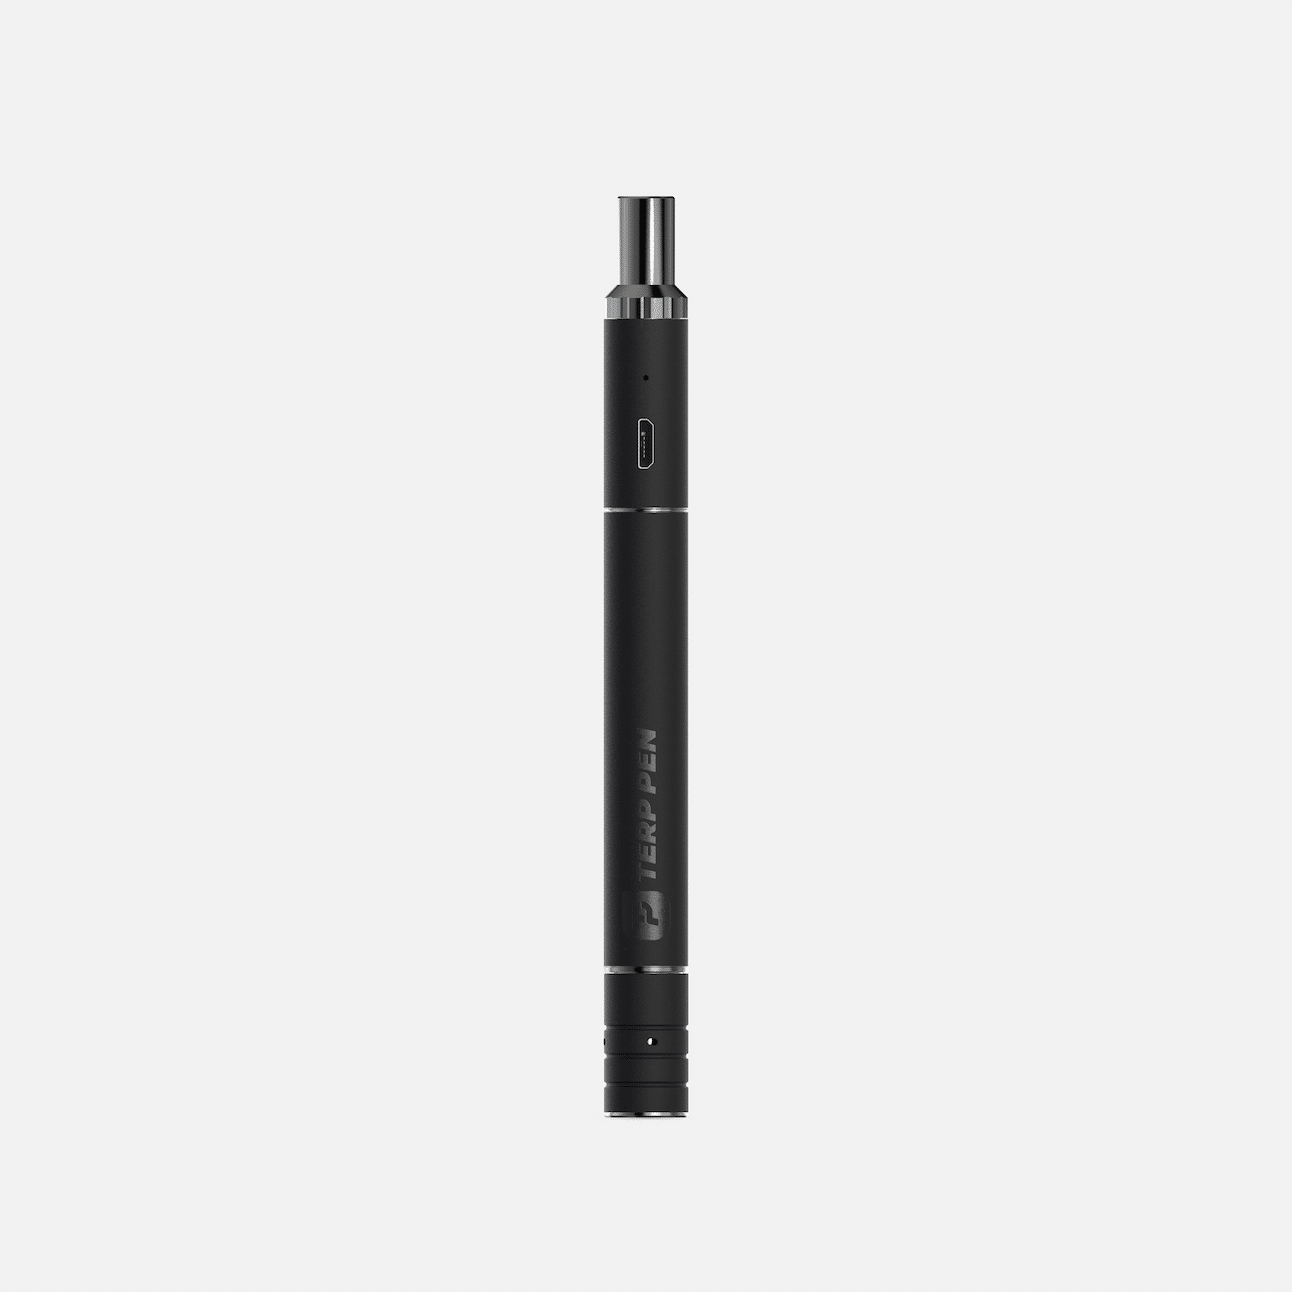 Boundless Terp Pen Vaporizer-Black